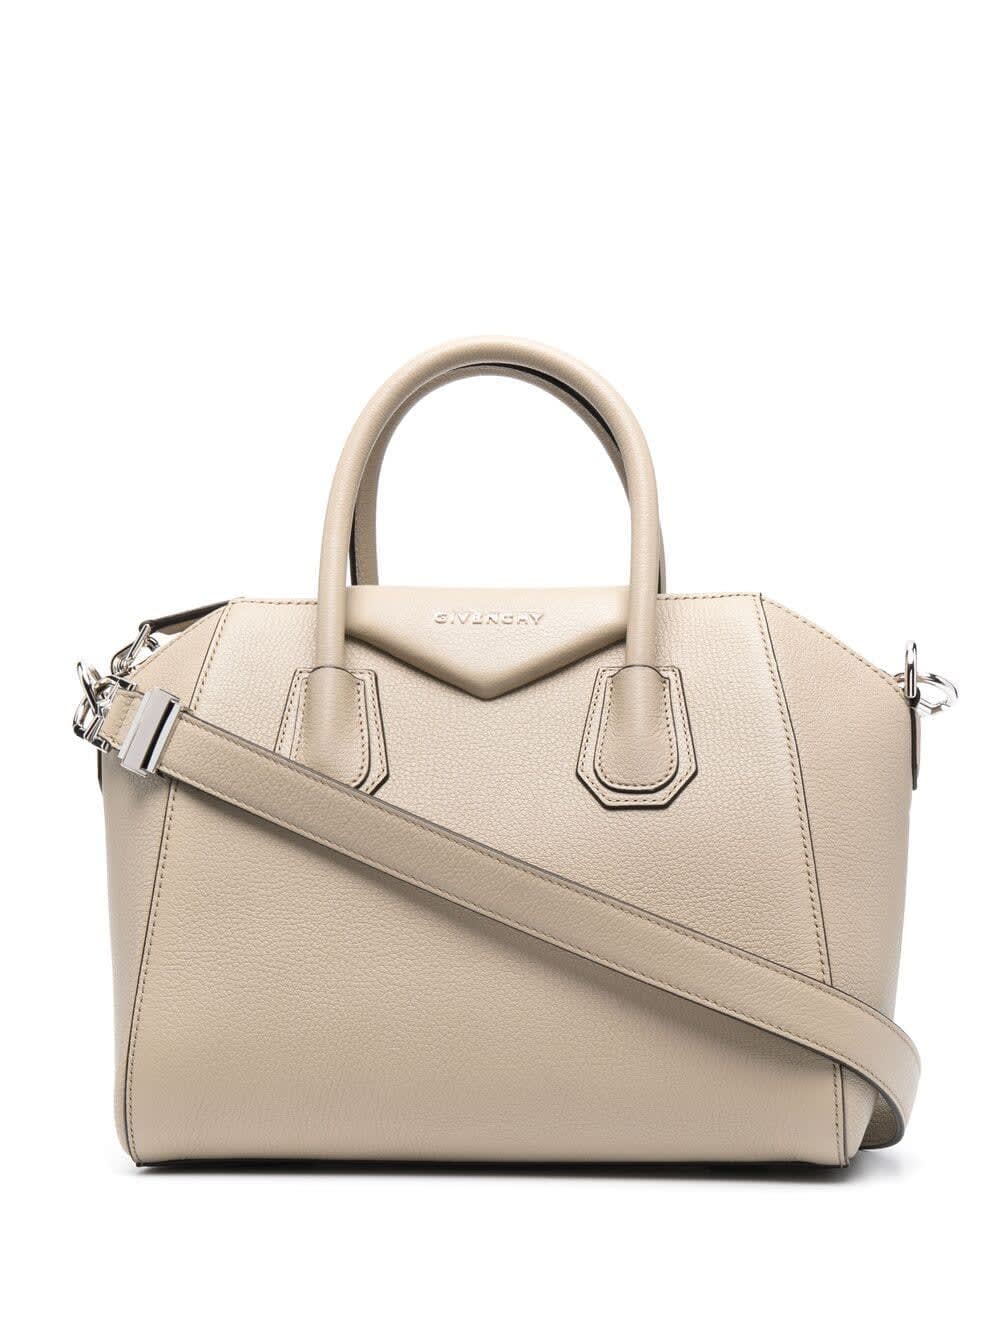 Givenchy Small Antigona Bag In Beige Grain Leather